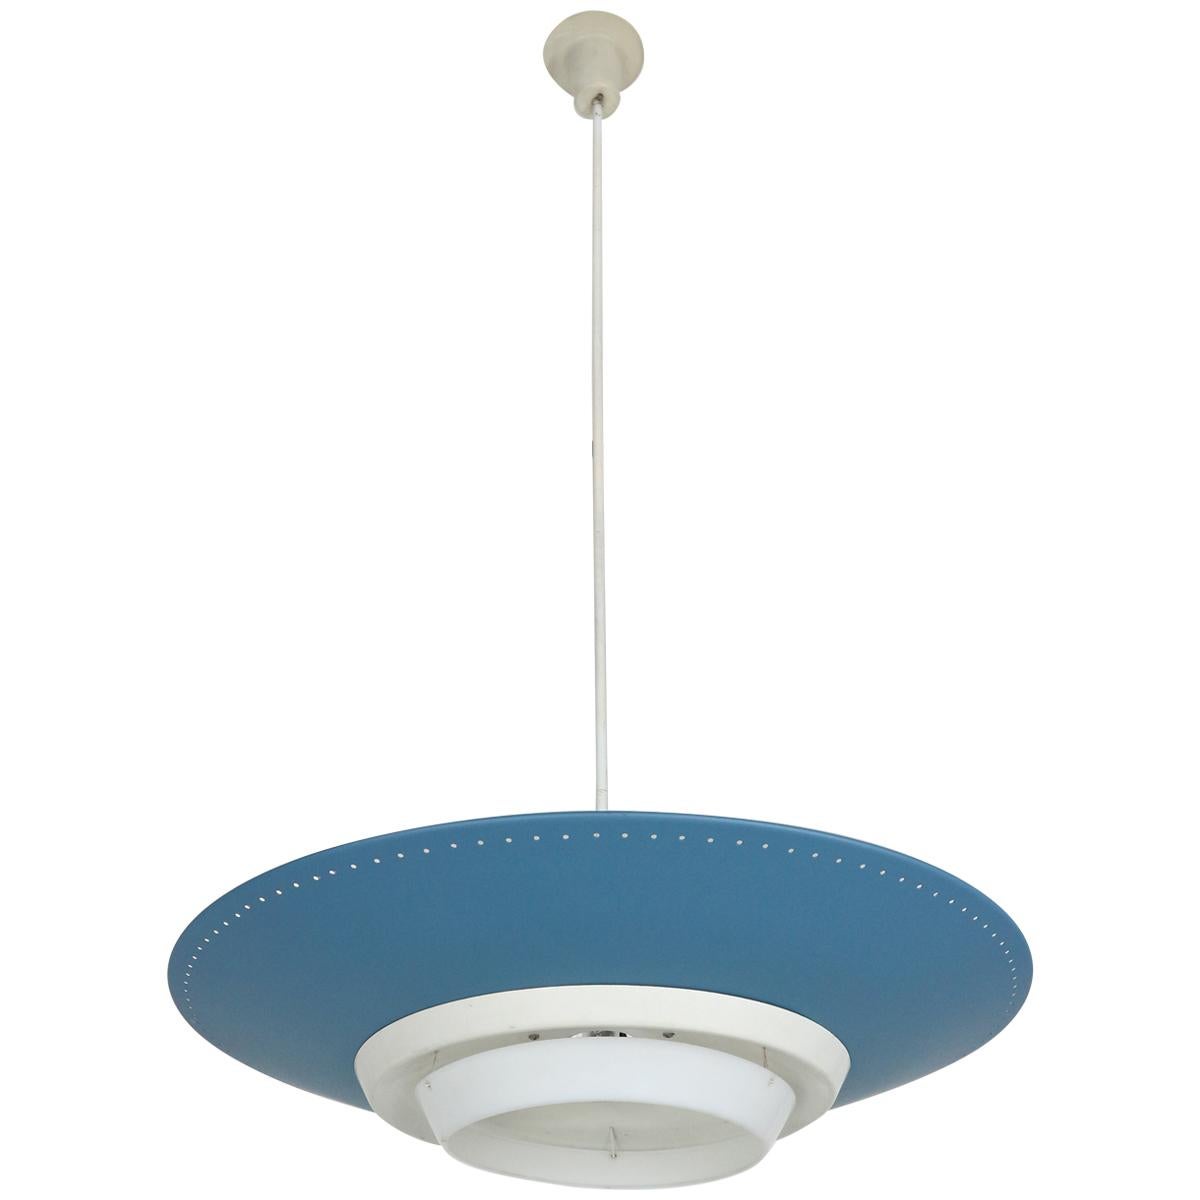 Louis Kalff For Philips Industrial Ceiling Lamp, Dutch Design, 1950